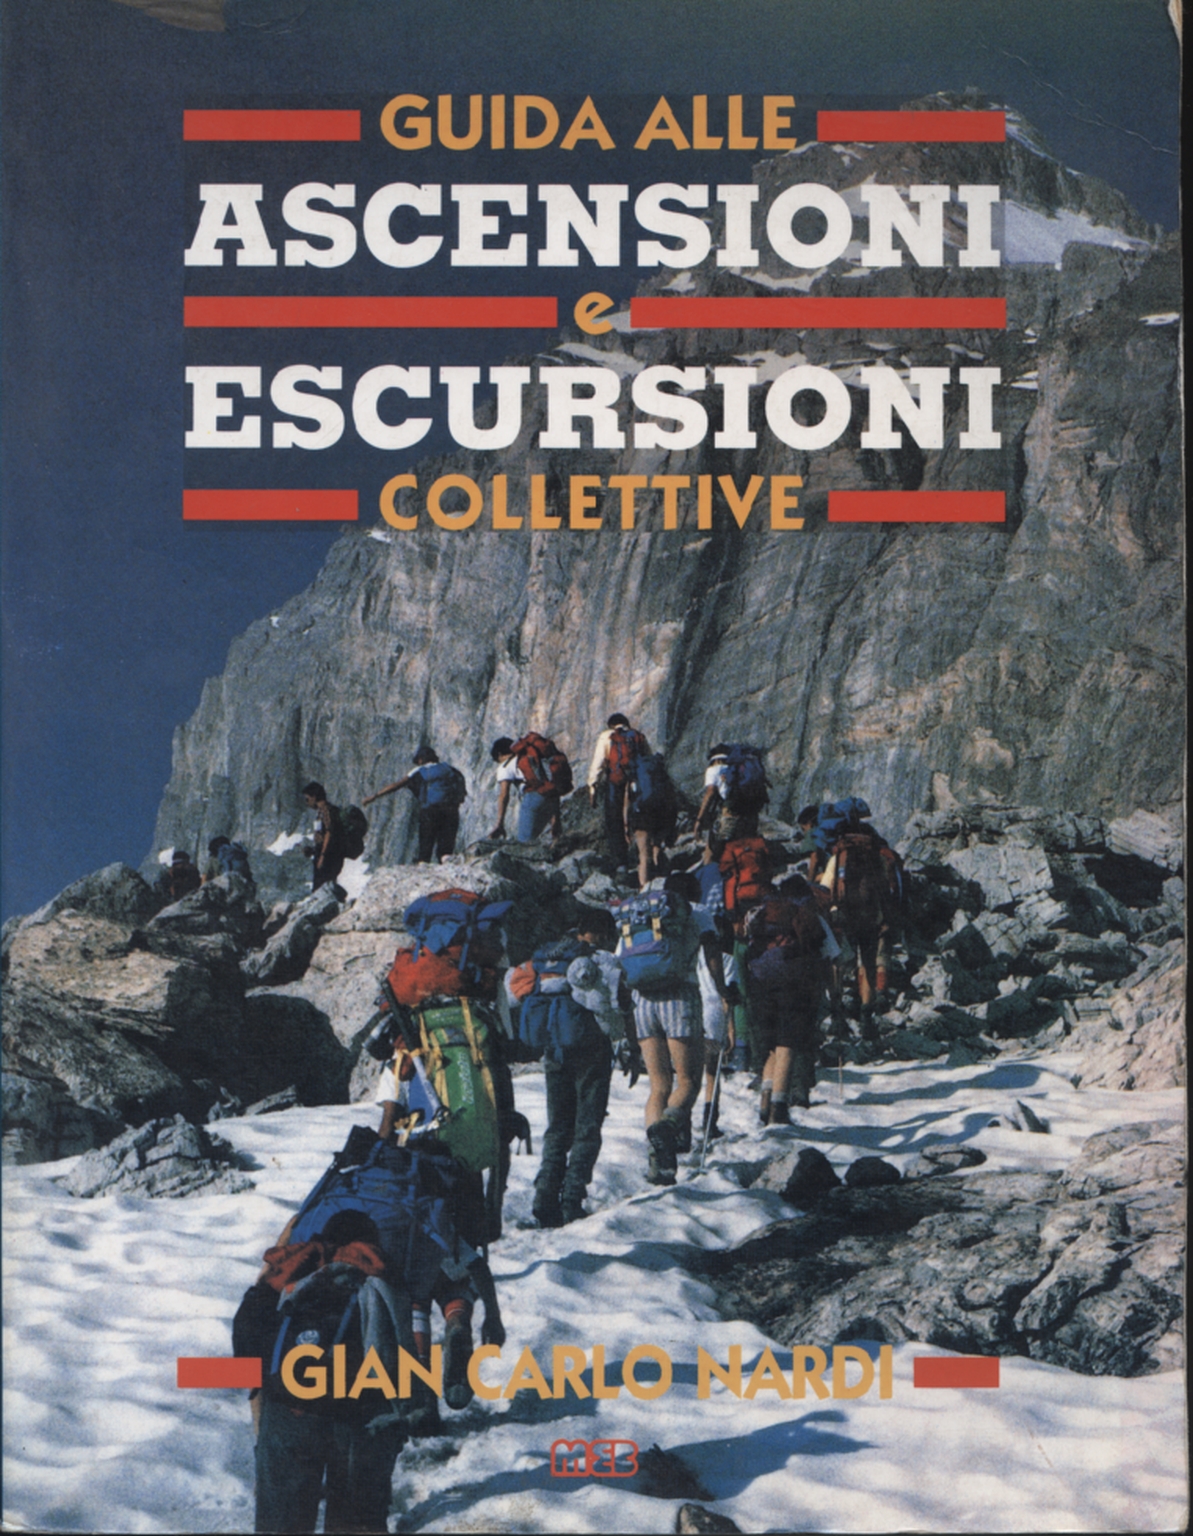 Guide to climbing and hiking collective, Gian Carlo Nardi